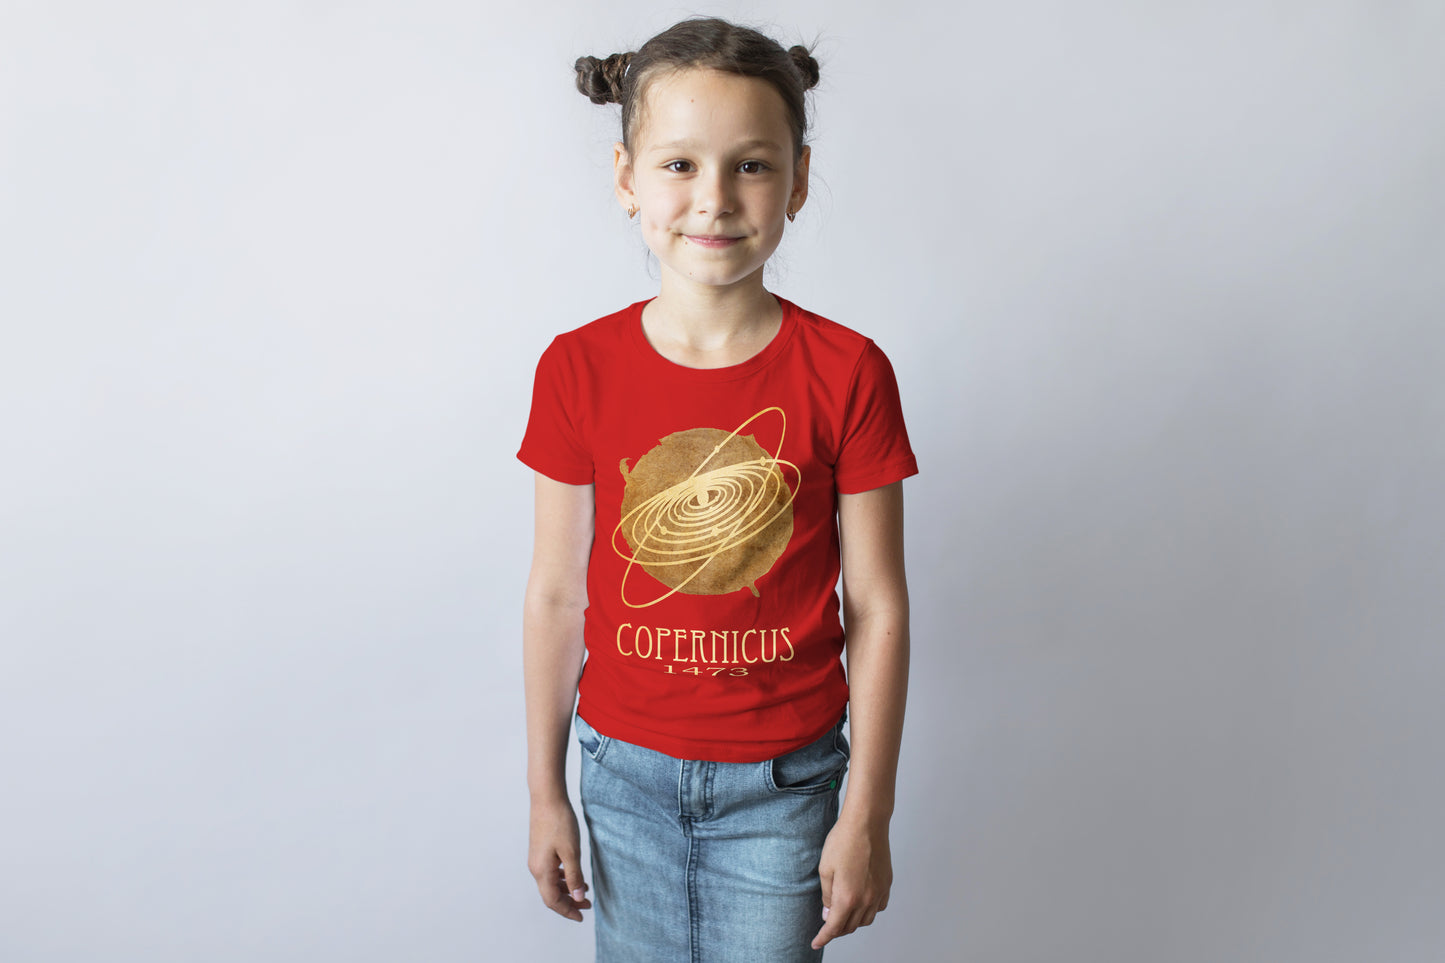 Copernicus Solar System T-shirt, Nicolaus Copernicus Astronomy Tee